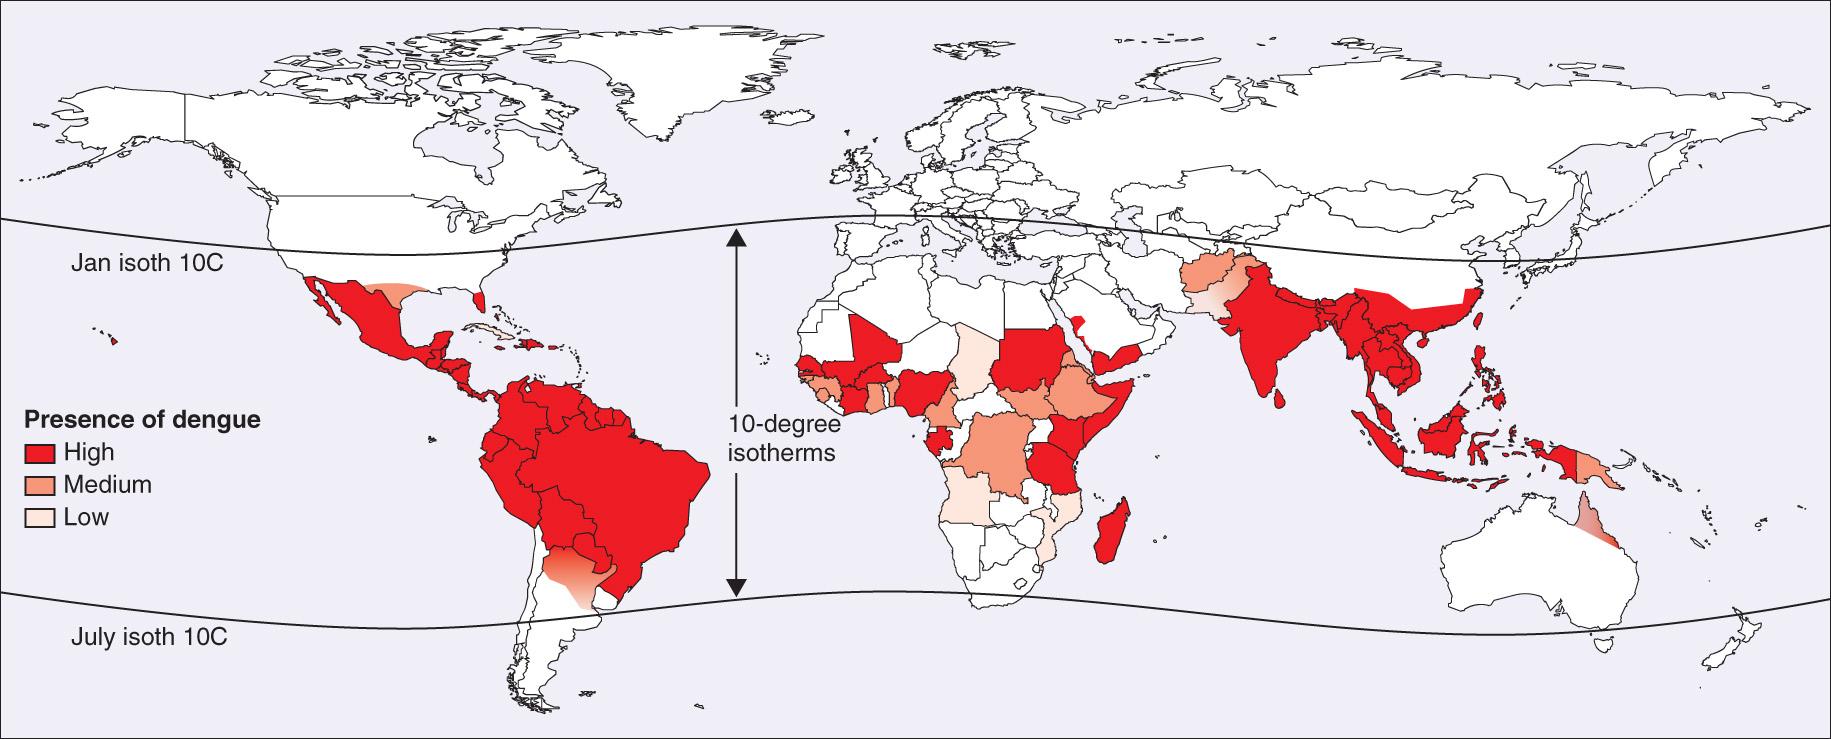 Fig. 295.1, Global dengue burden, 2014.